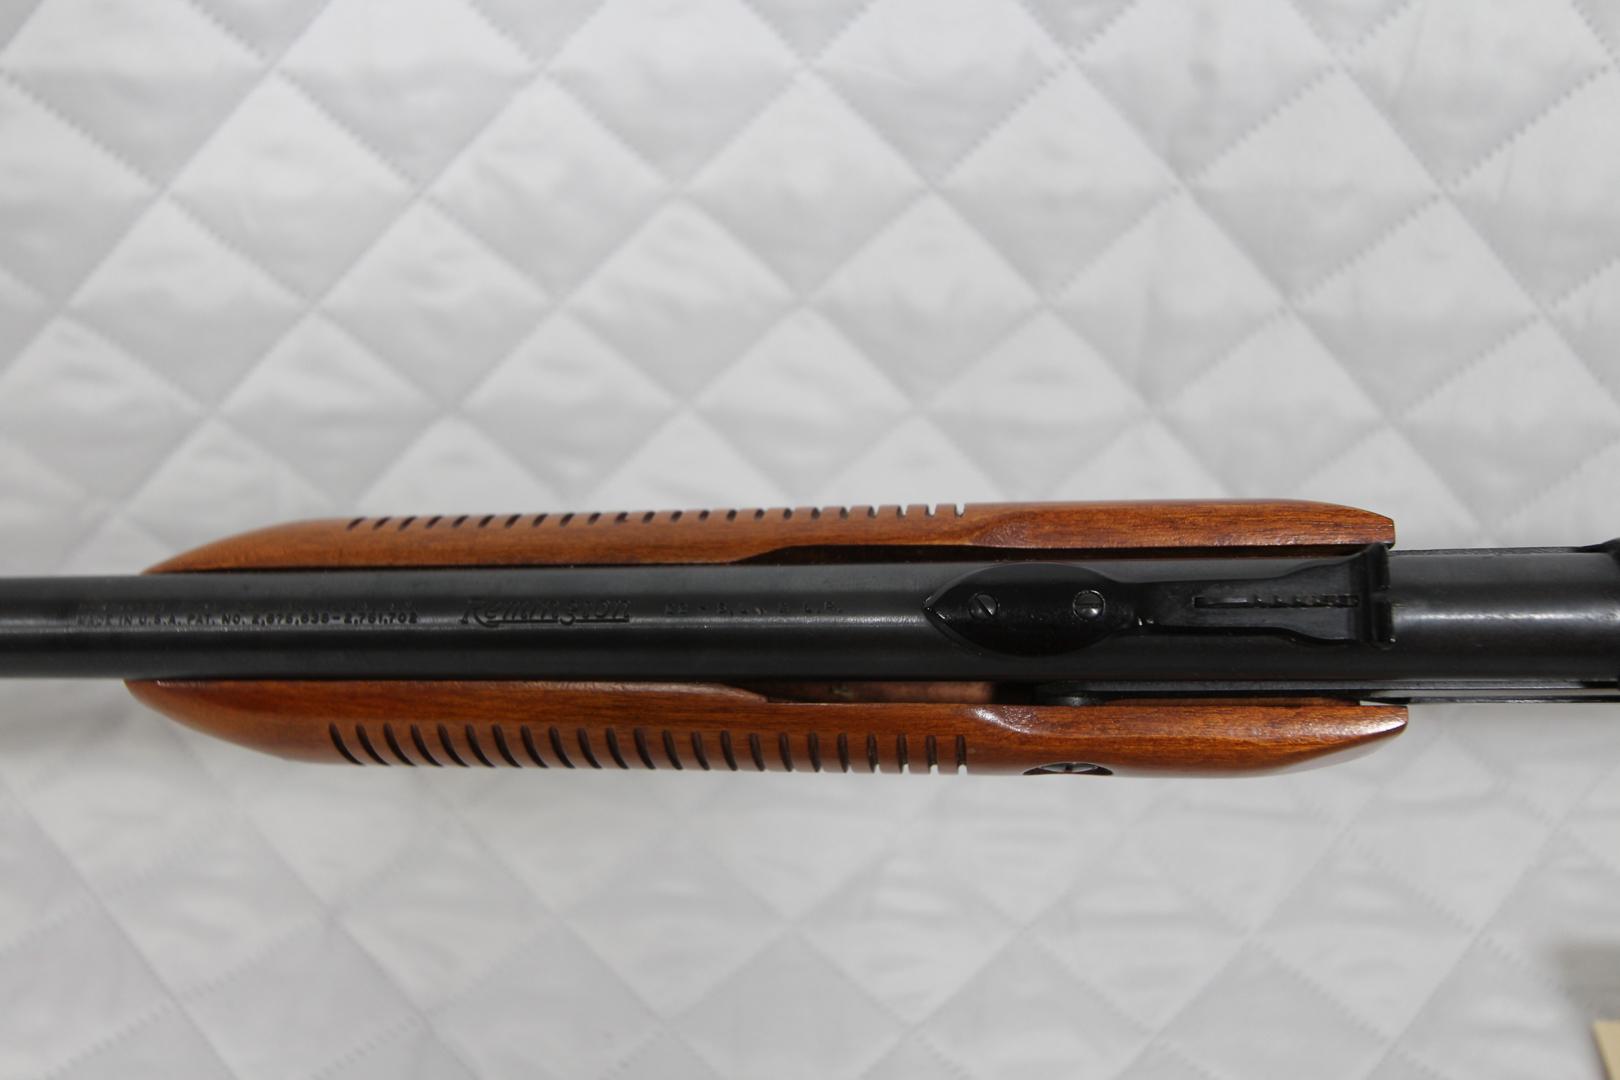 Remington Model 572